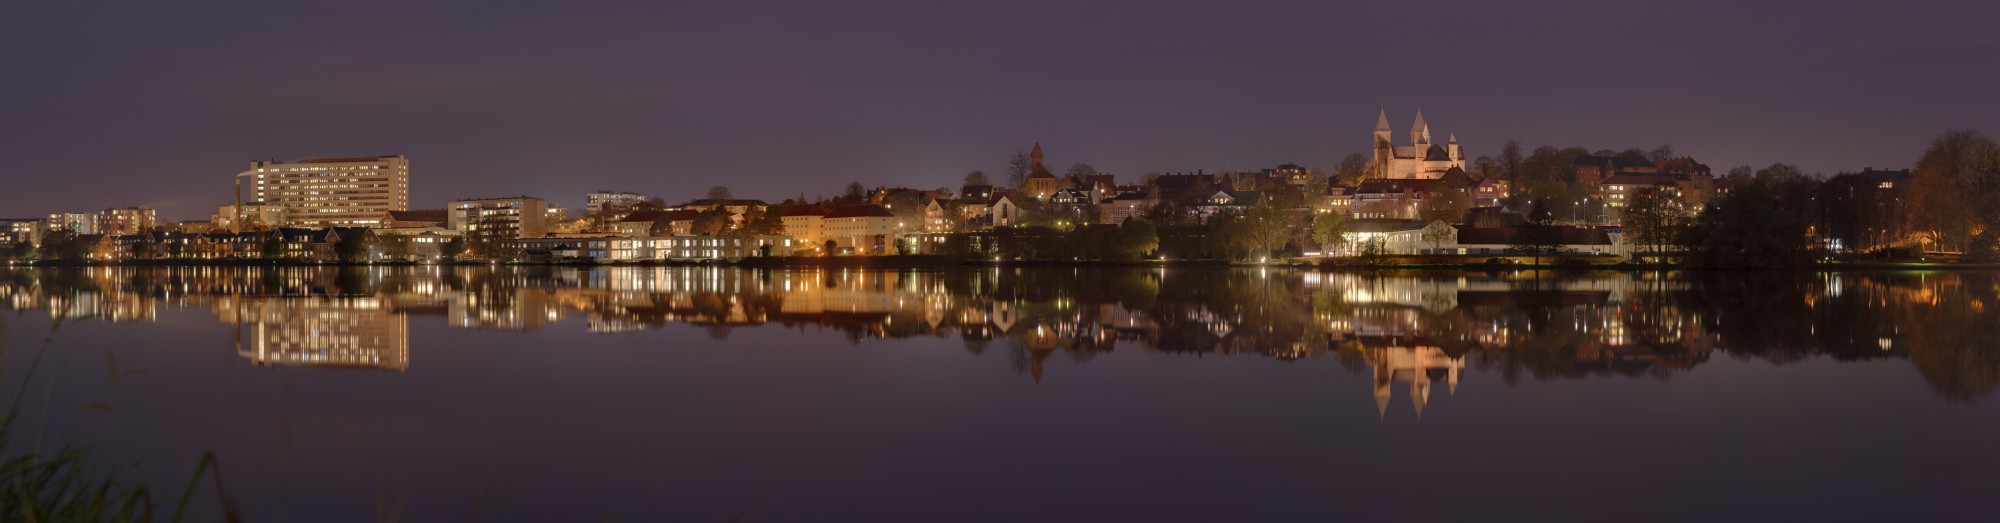 Viborg by night 2014-11-04 exposure fused